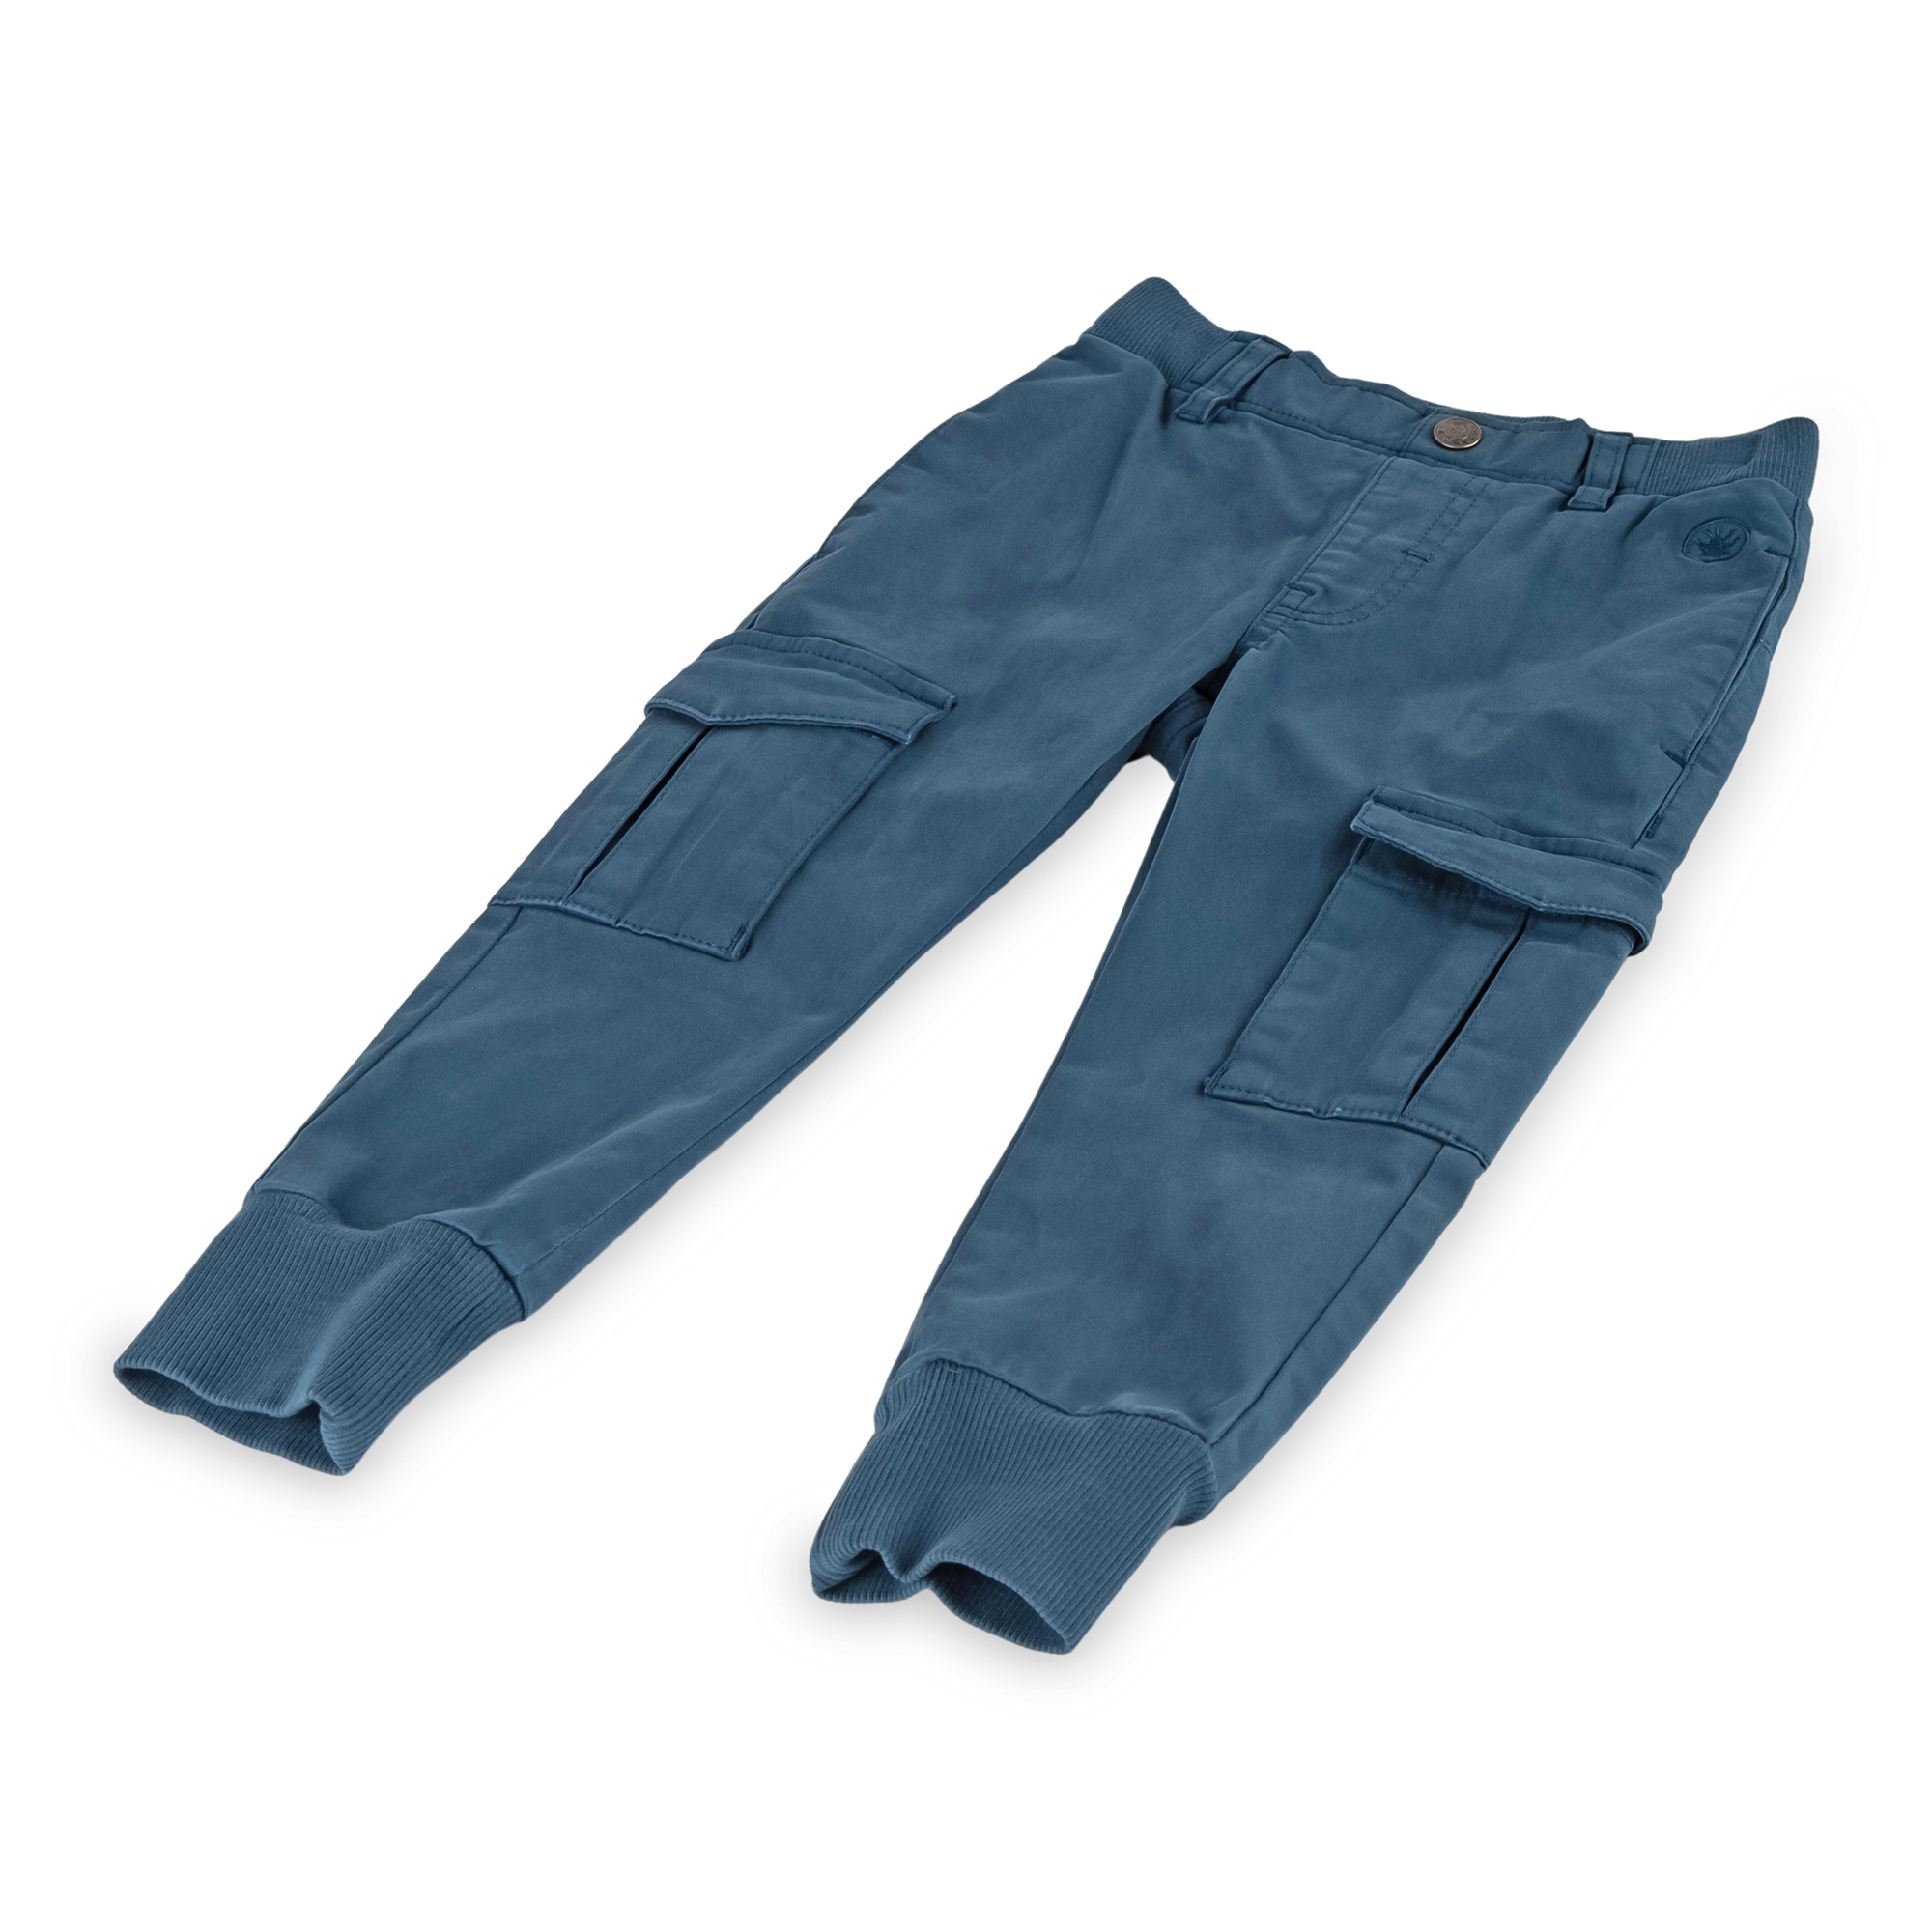 Children's cargo pants, dark teal blue